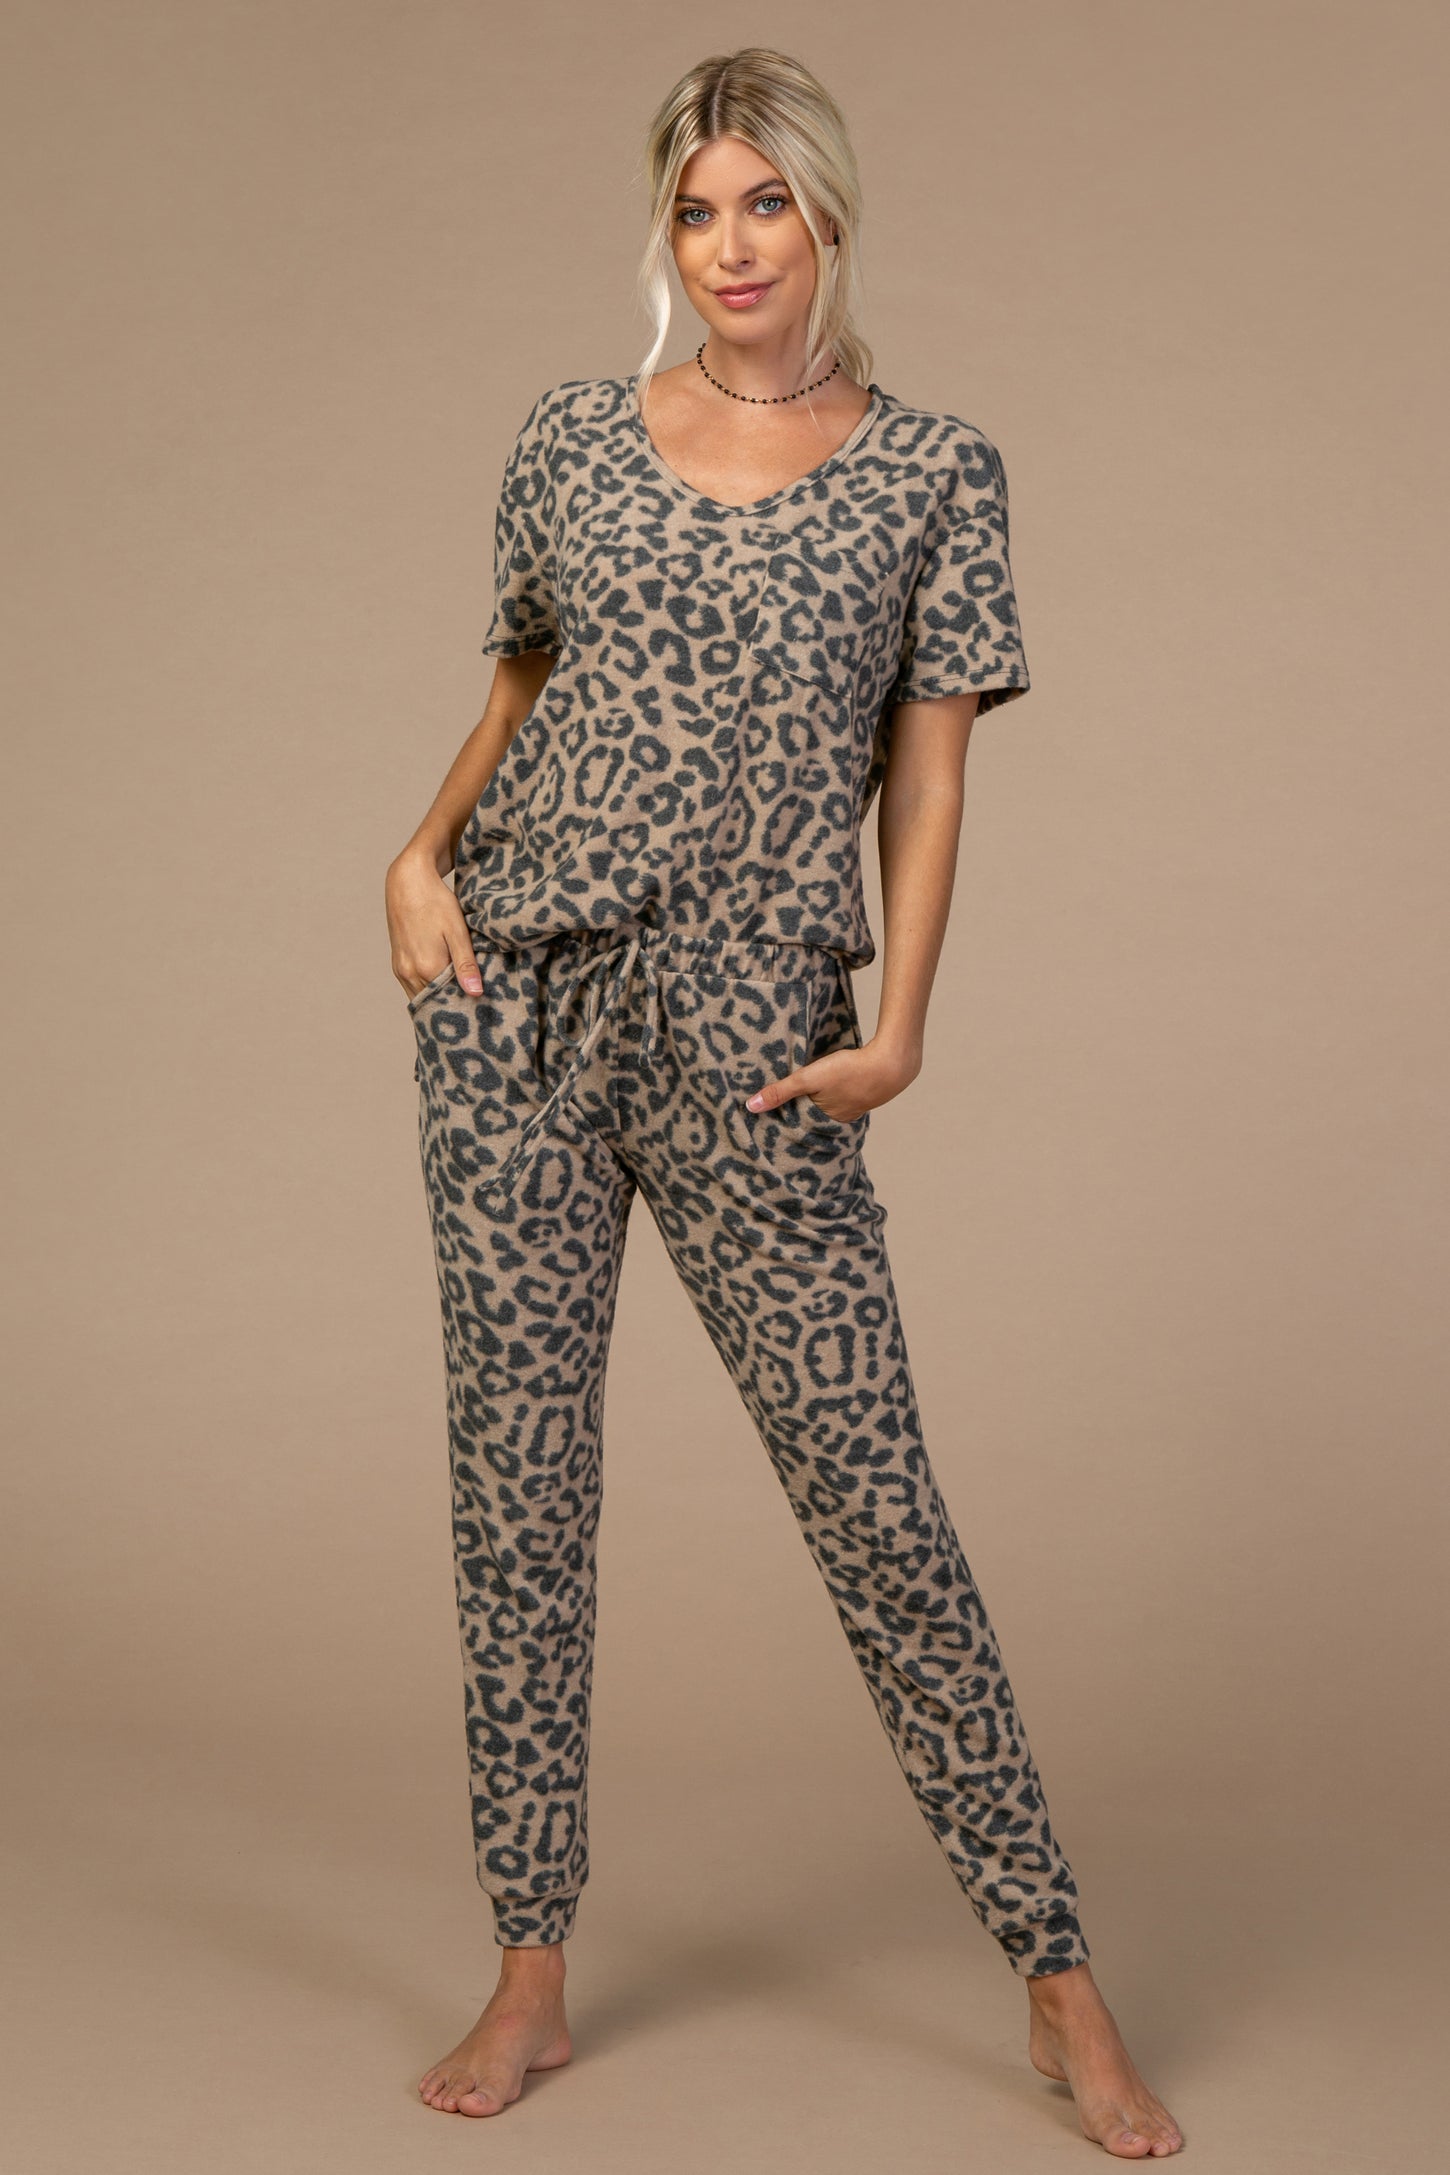 PinkBlush Camel Leopard Pocket Front Maternity Pajama Set